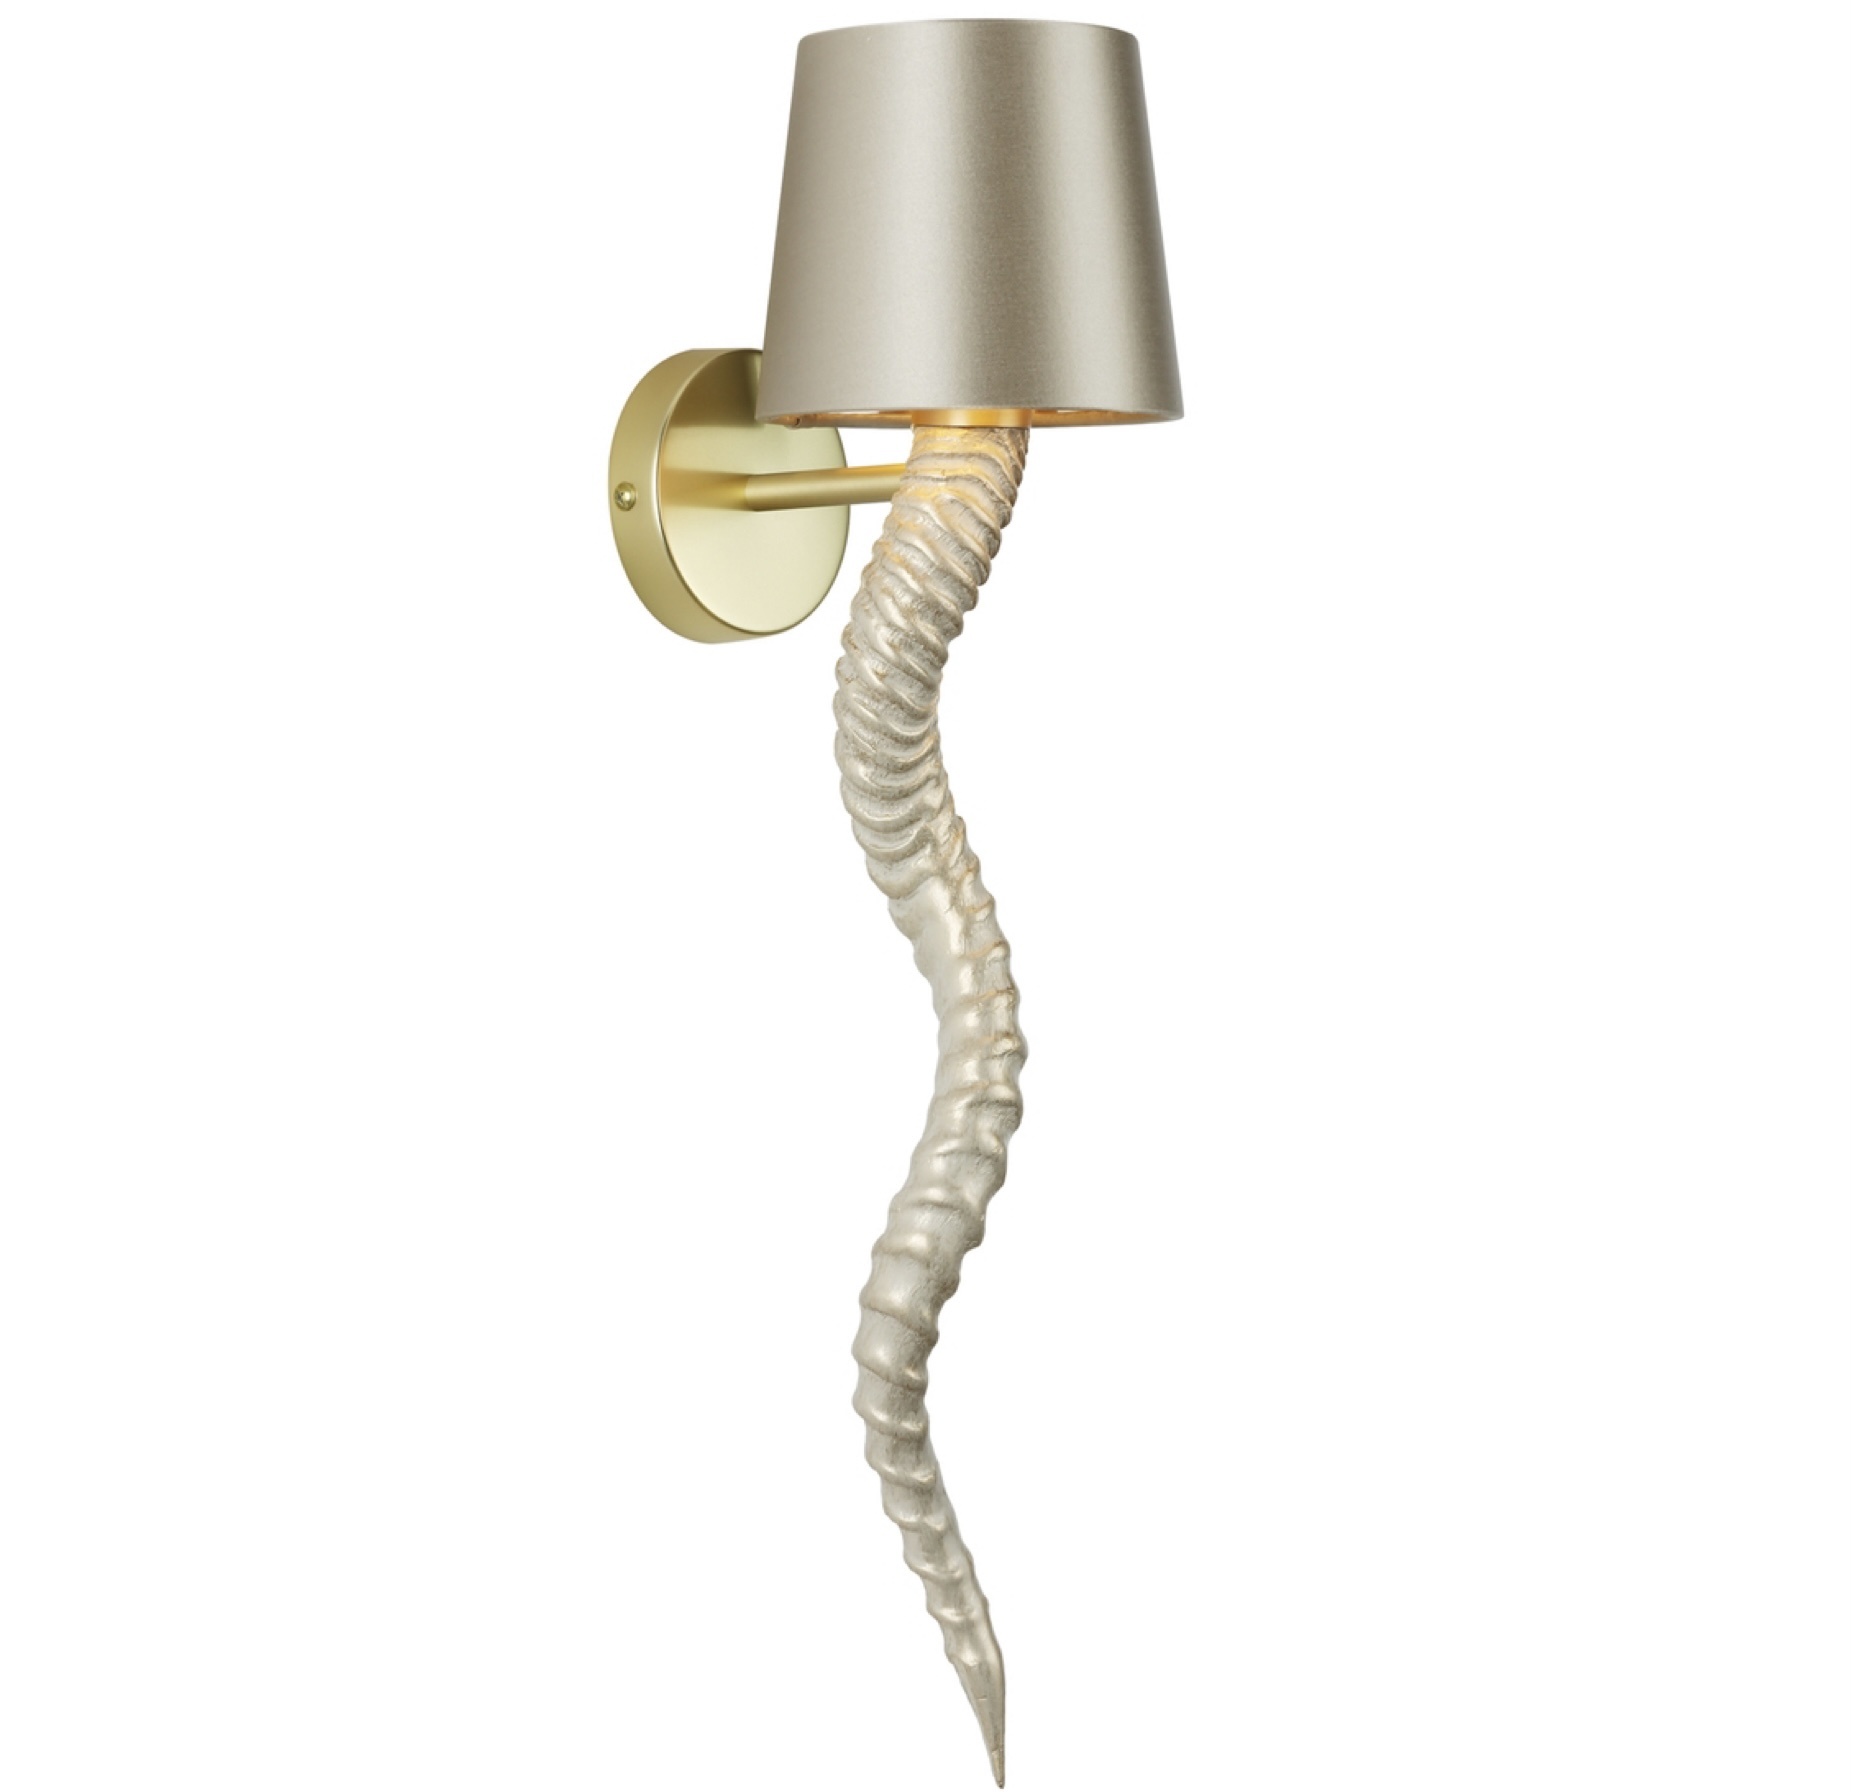 Kudu - Luxury Gold Horn Wall Light with Cream Satin Shade - David